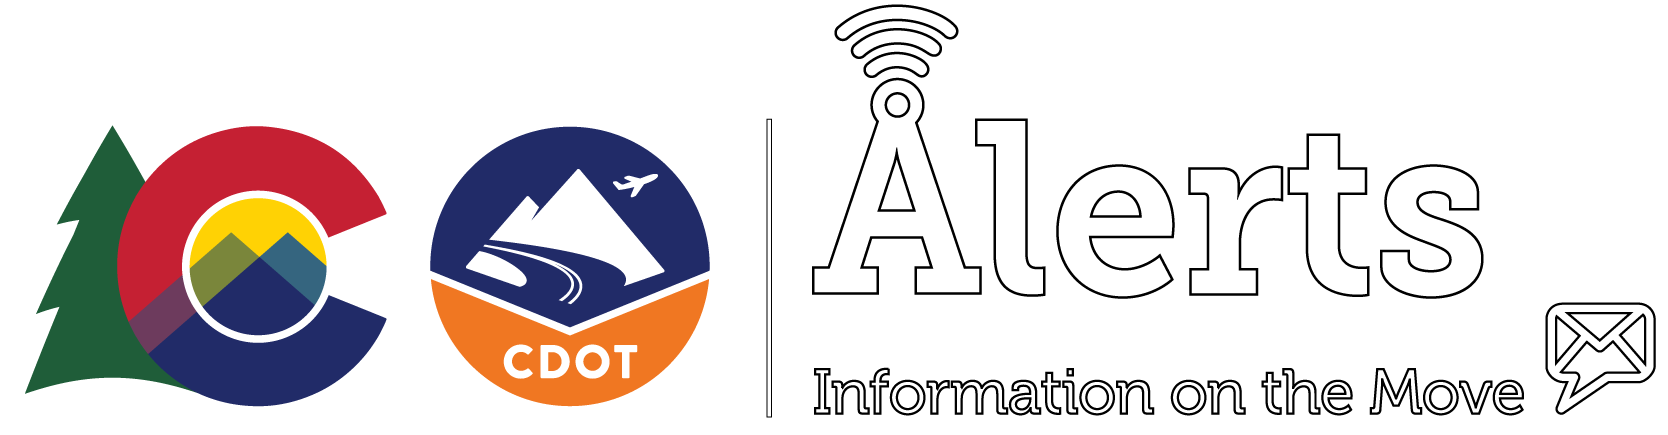 CDOT Alerts Logo with Stroke.png detail image